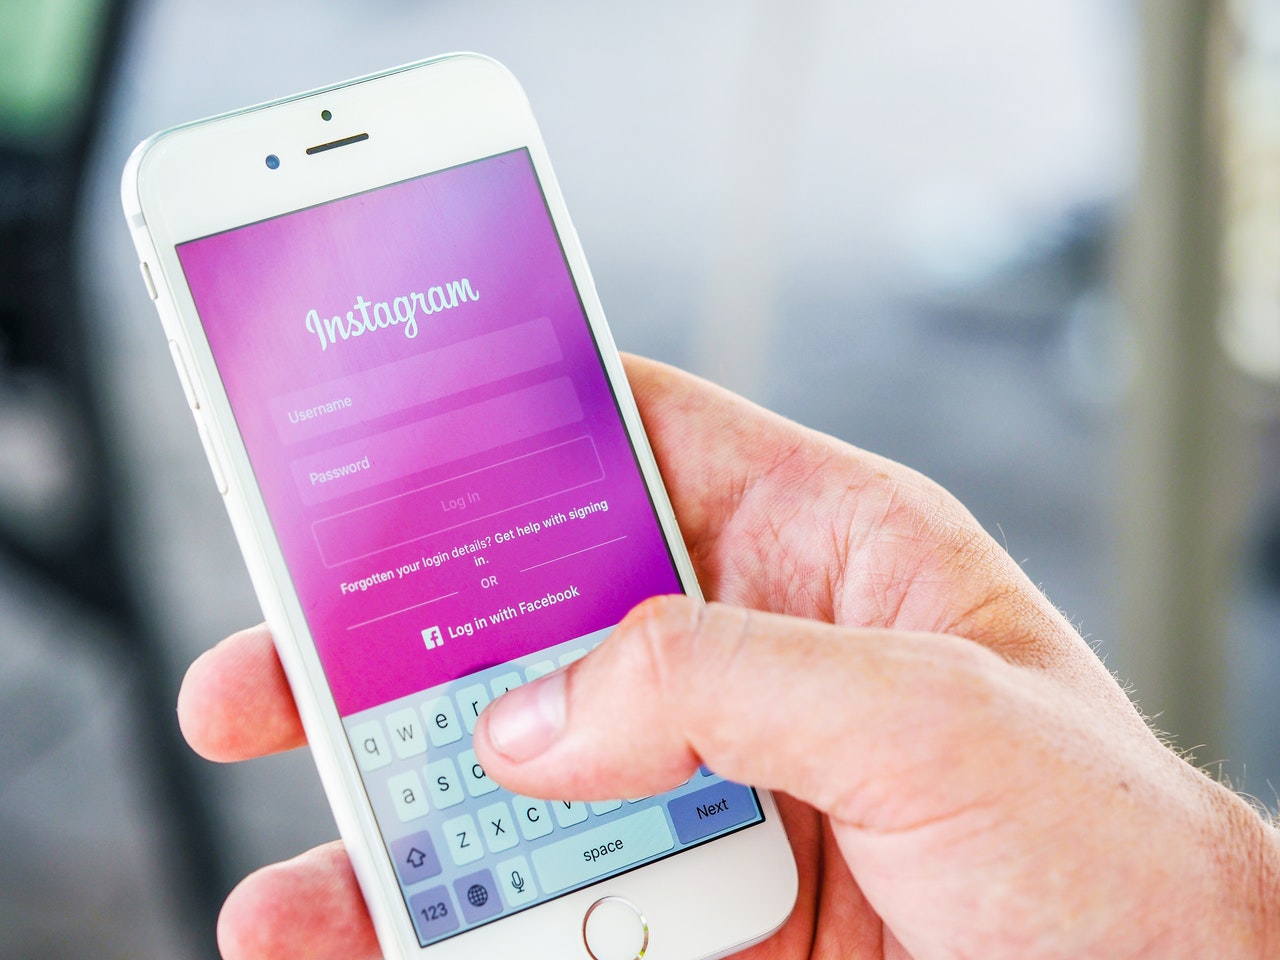 building a social media campaign on Instagram